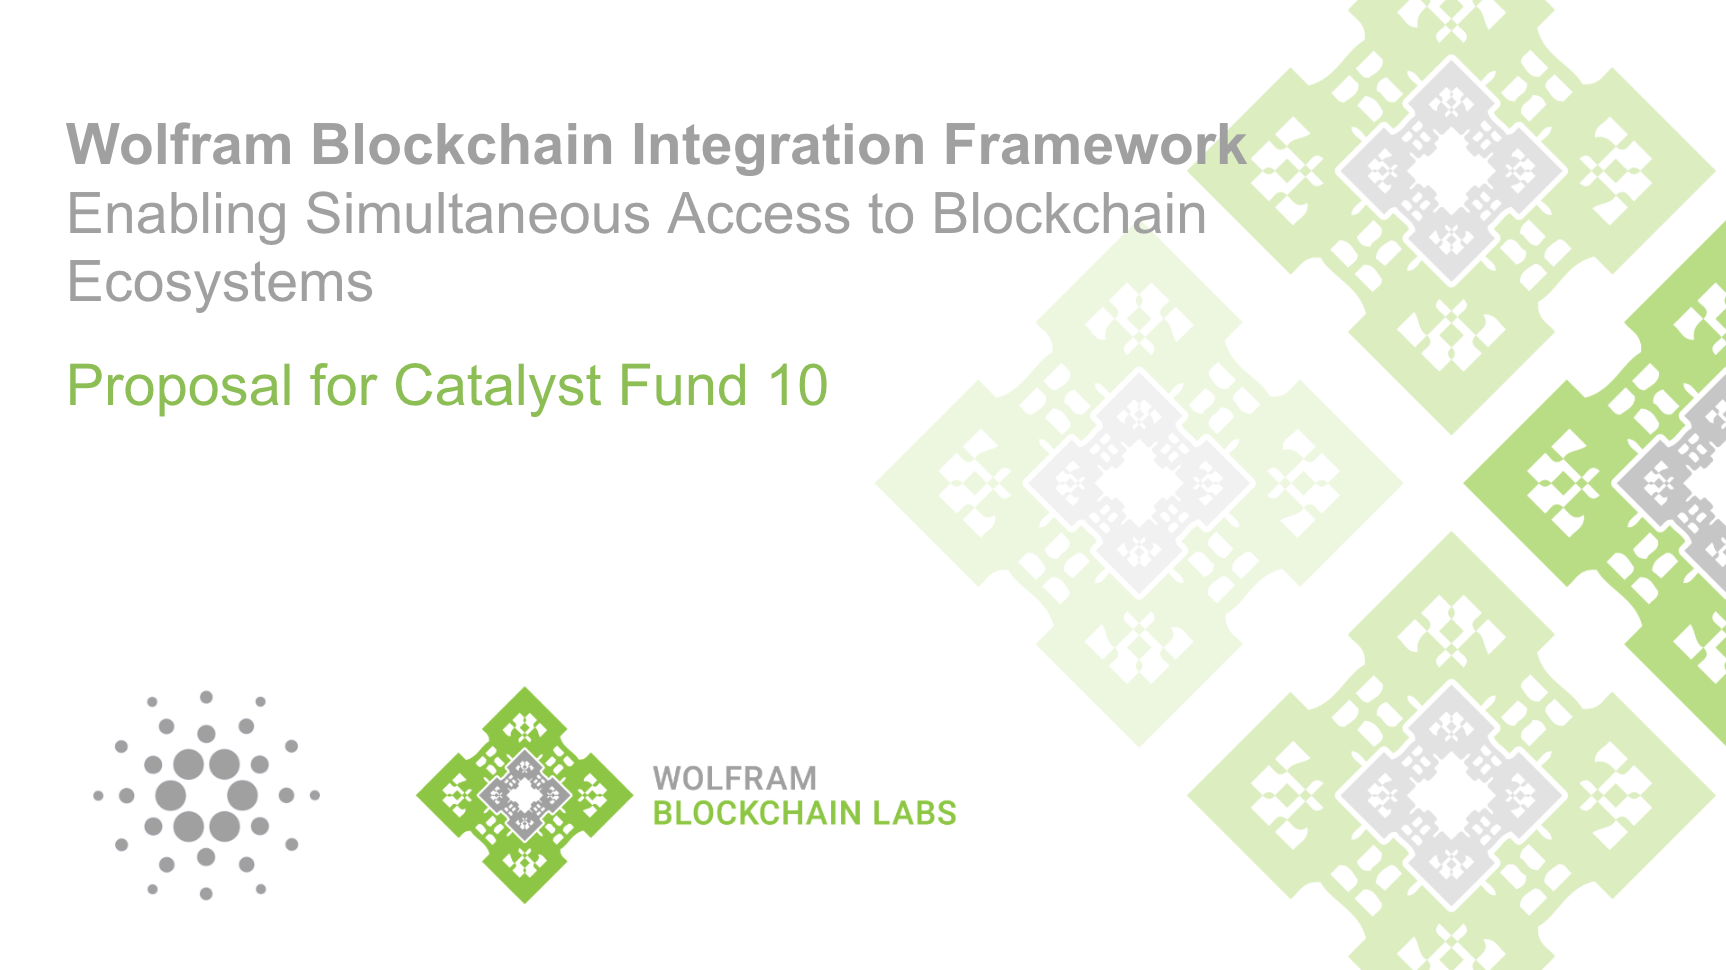 Wolfram Blockchain Integration Framework Video